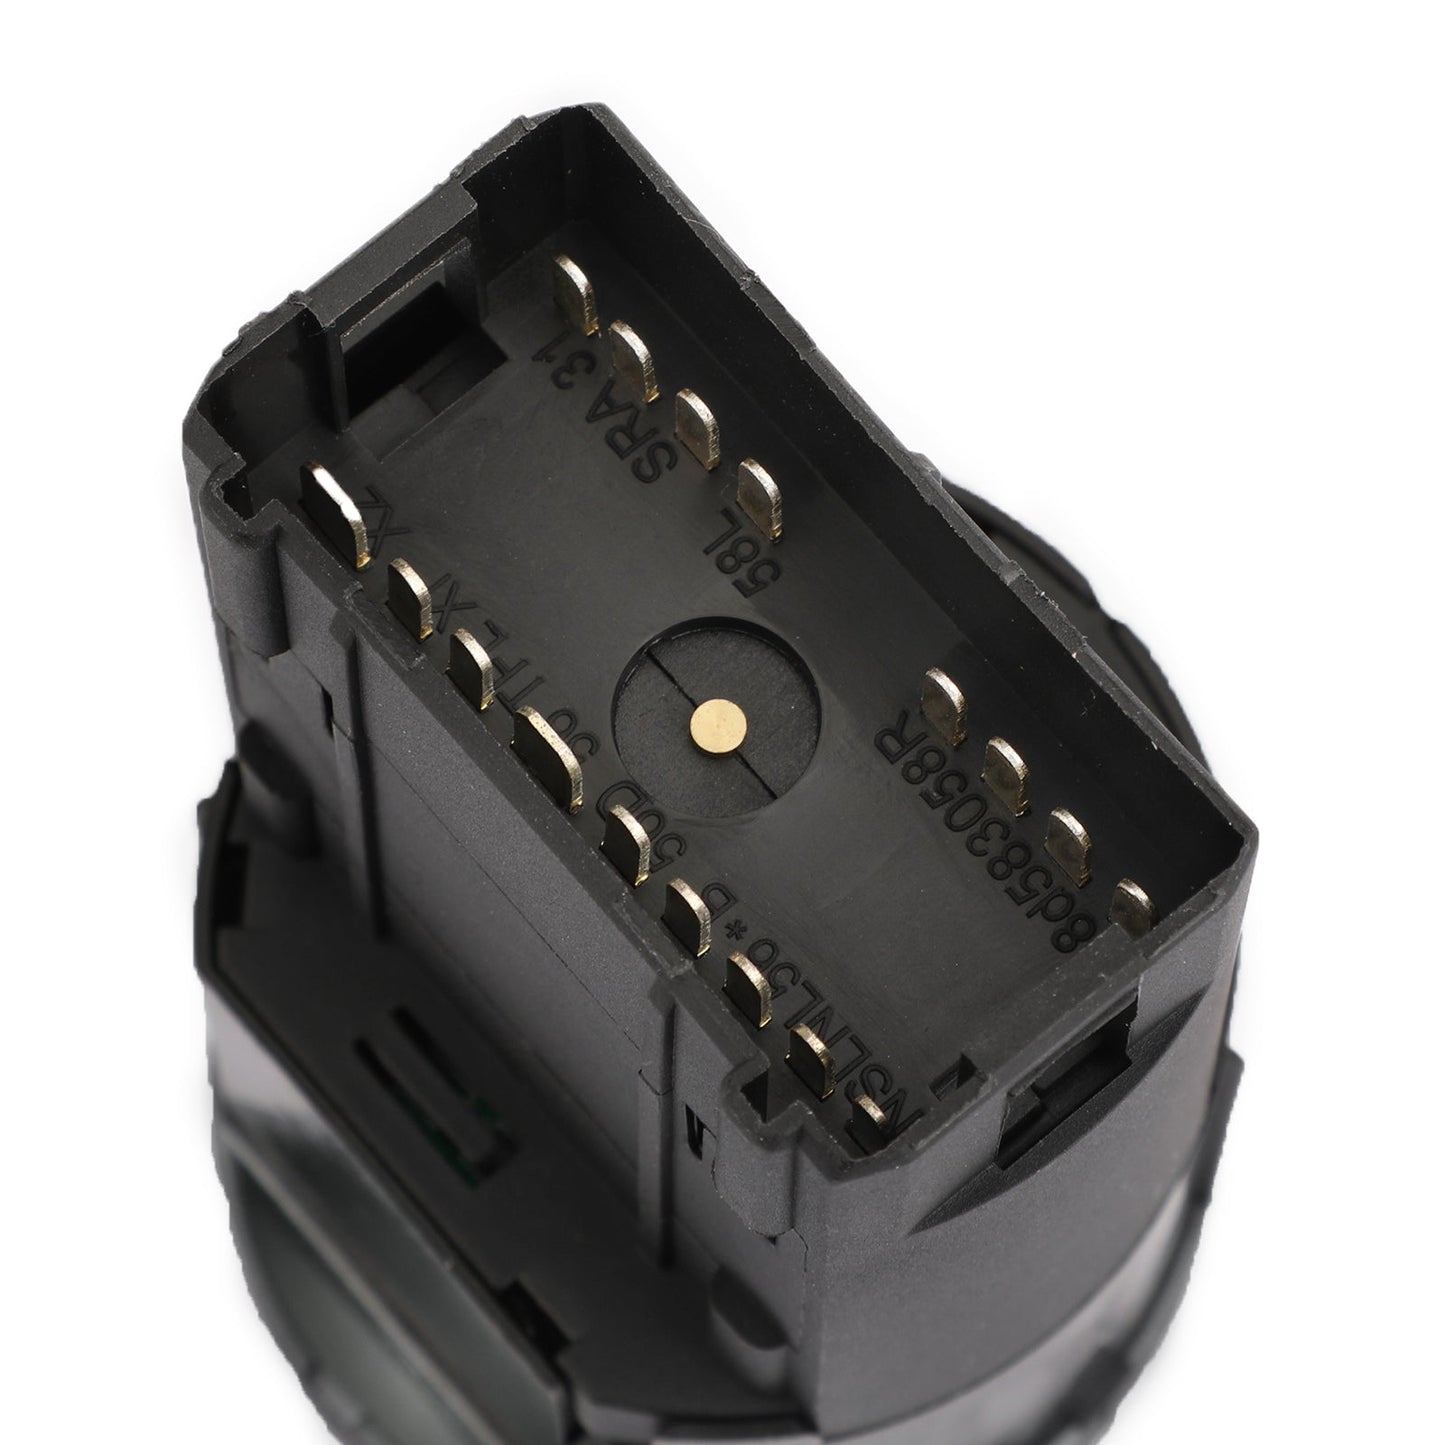 Headlight Control Head Light Switch for For Audi A4 B6 Quattro 02-05 S4 04-05 A4 B7 06-08 Black